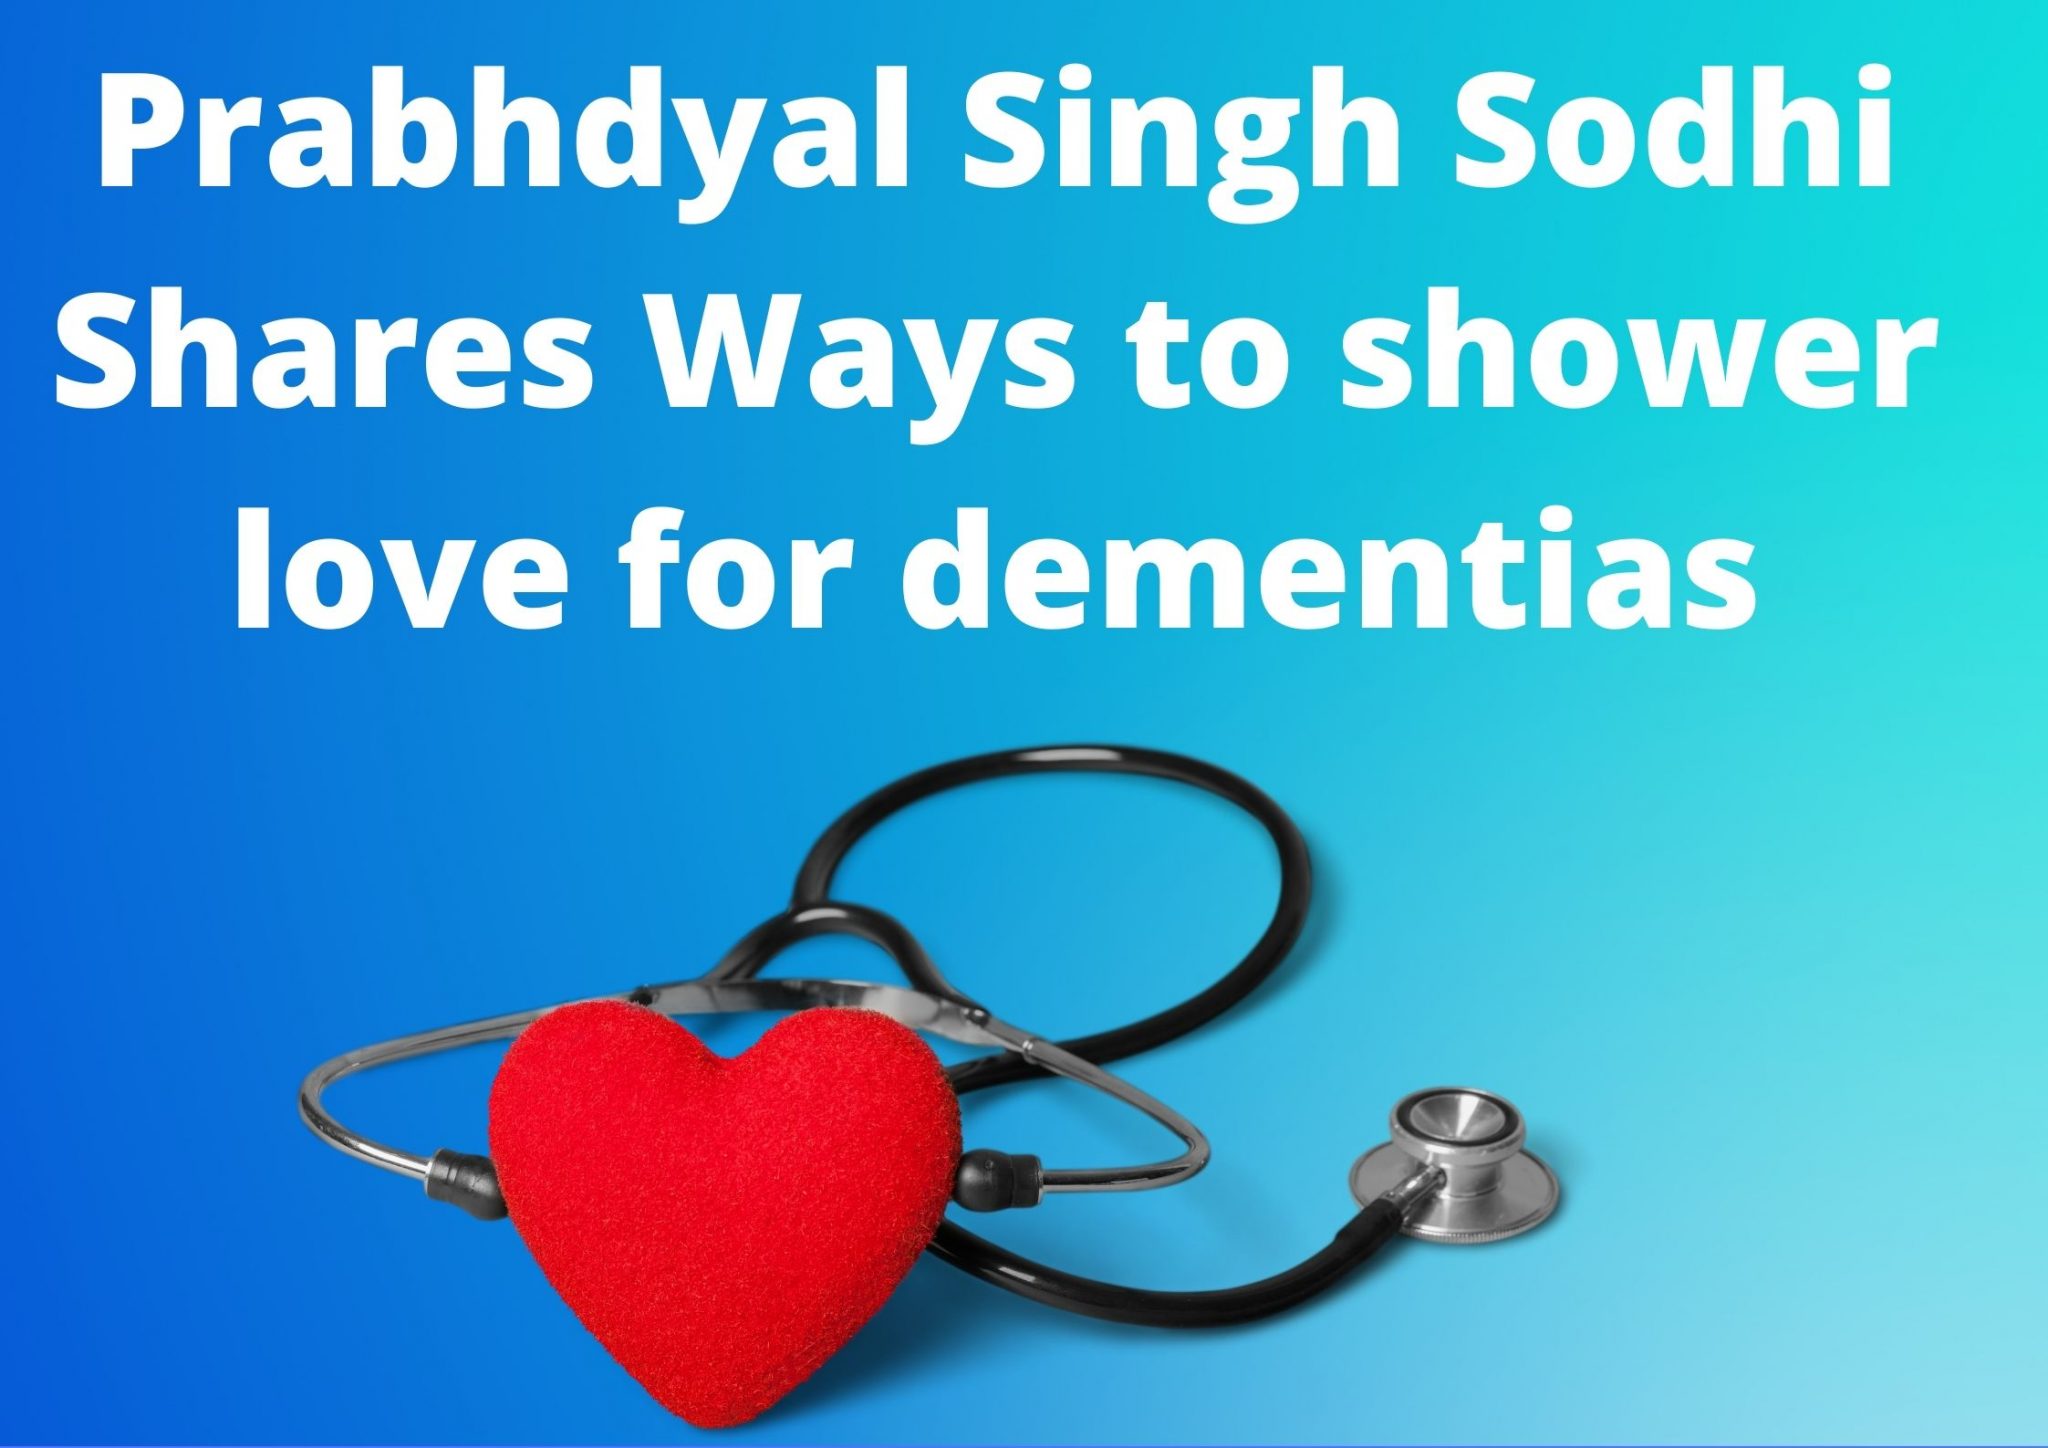 Prabhdyal Singh Sodhi Shares Ways to shower love for dementias